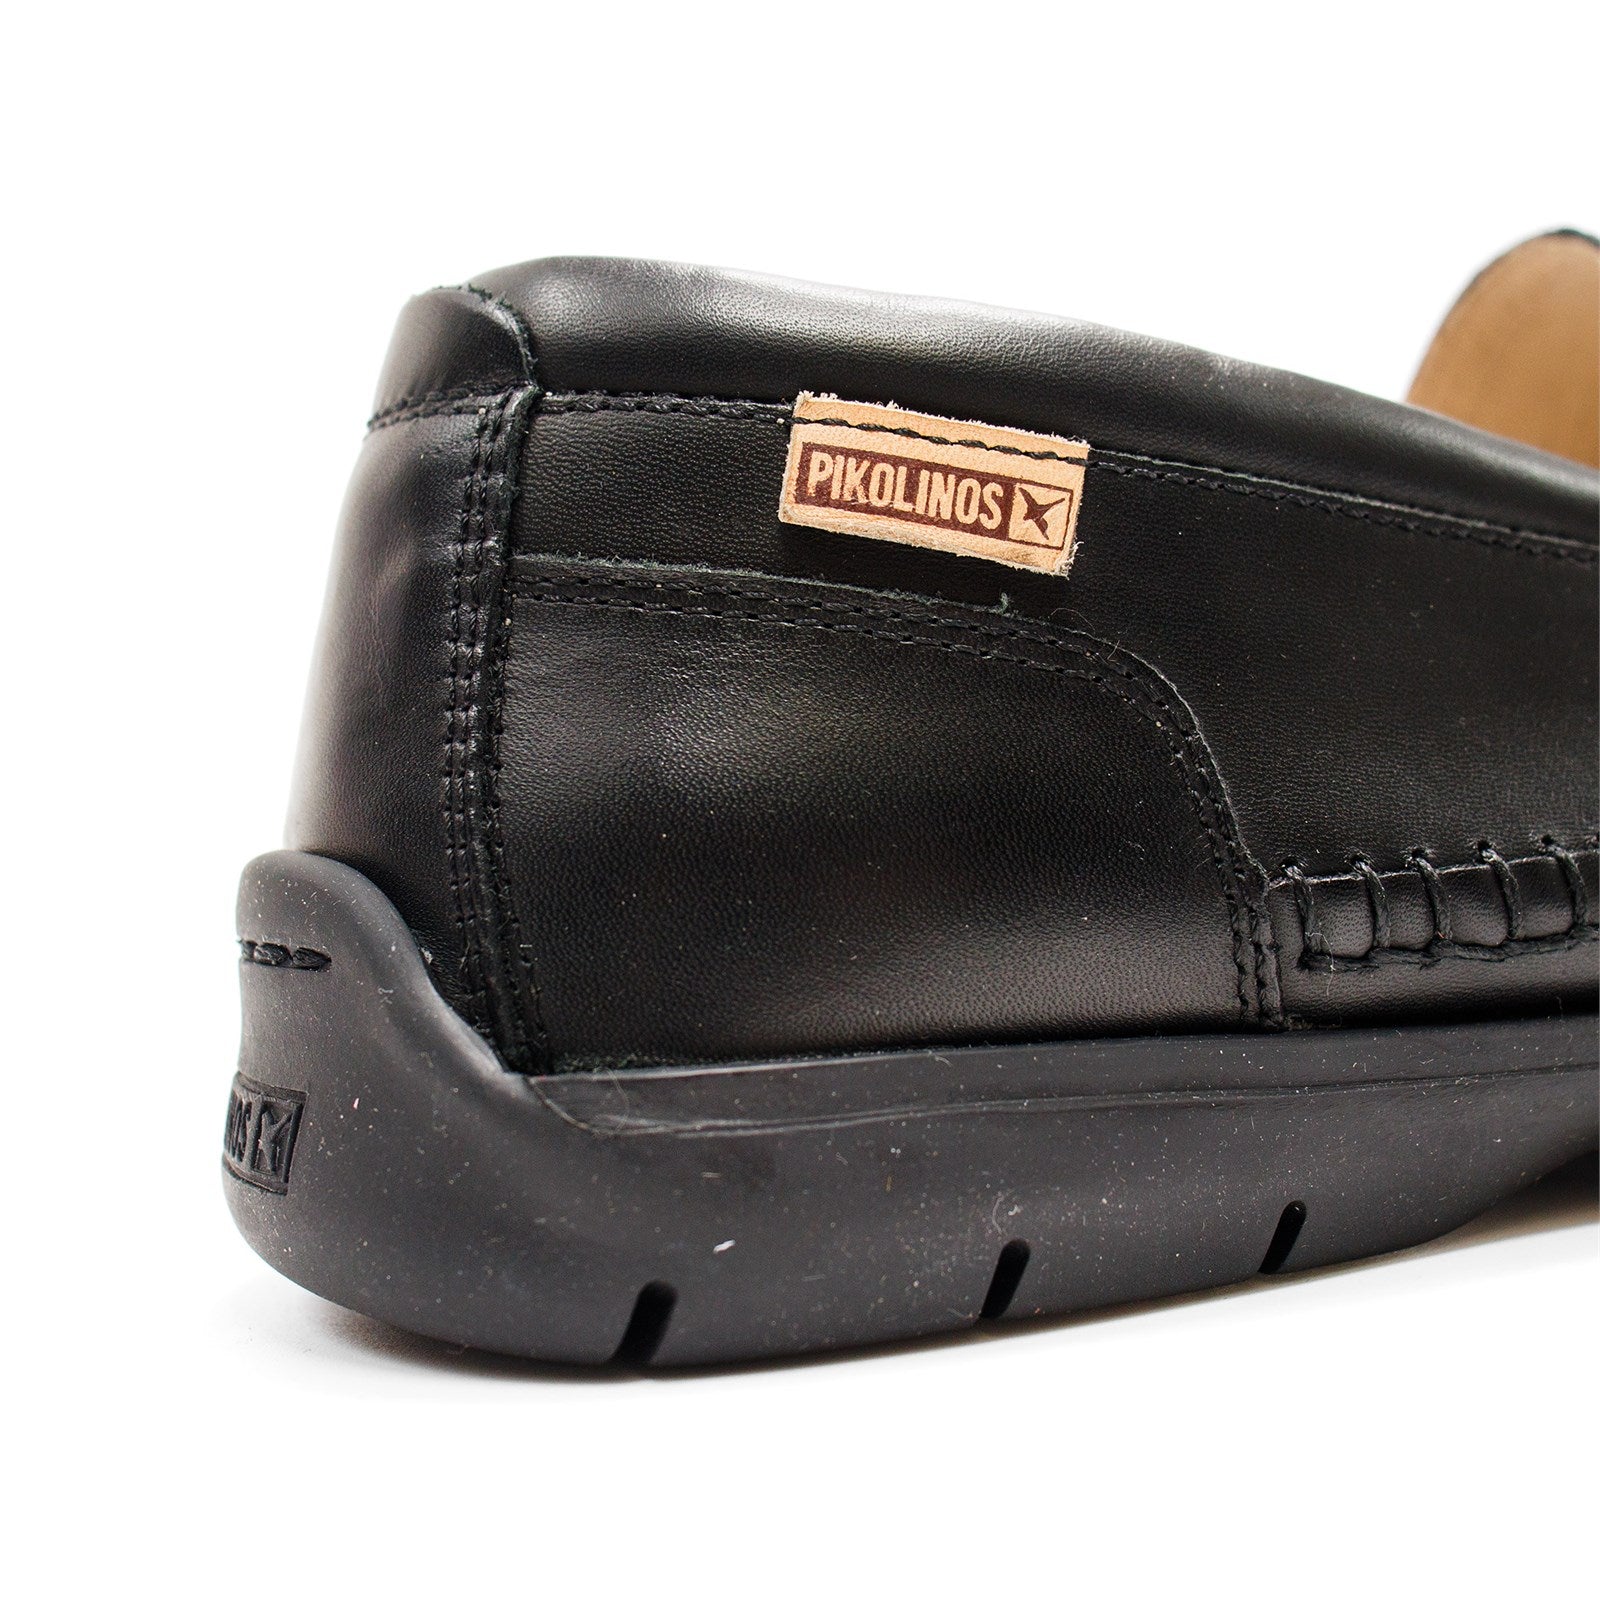 Pikolinos Men Marbella Leather Slip-On Loafer